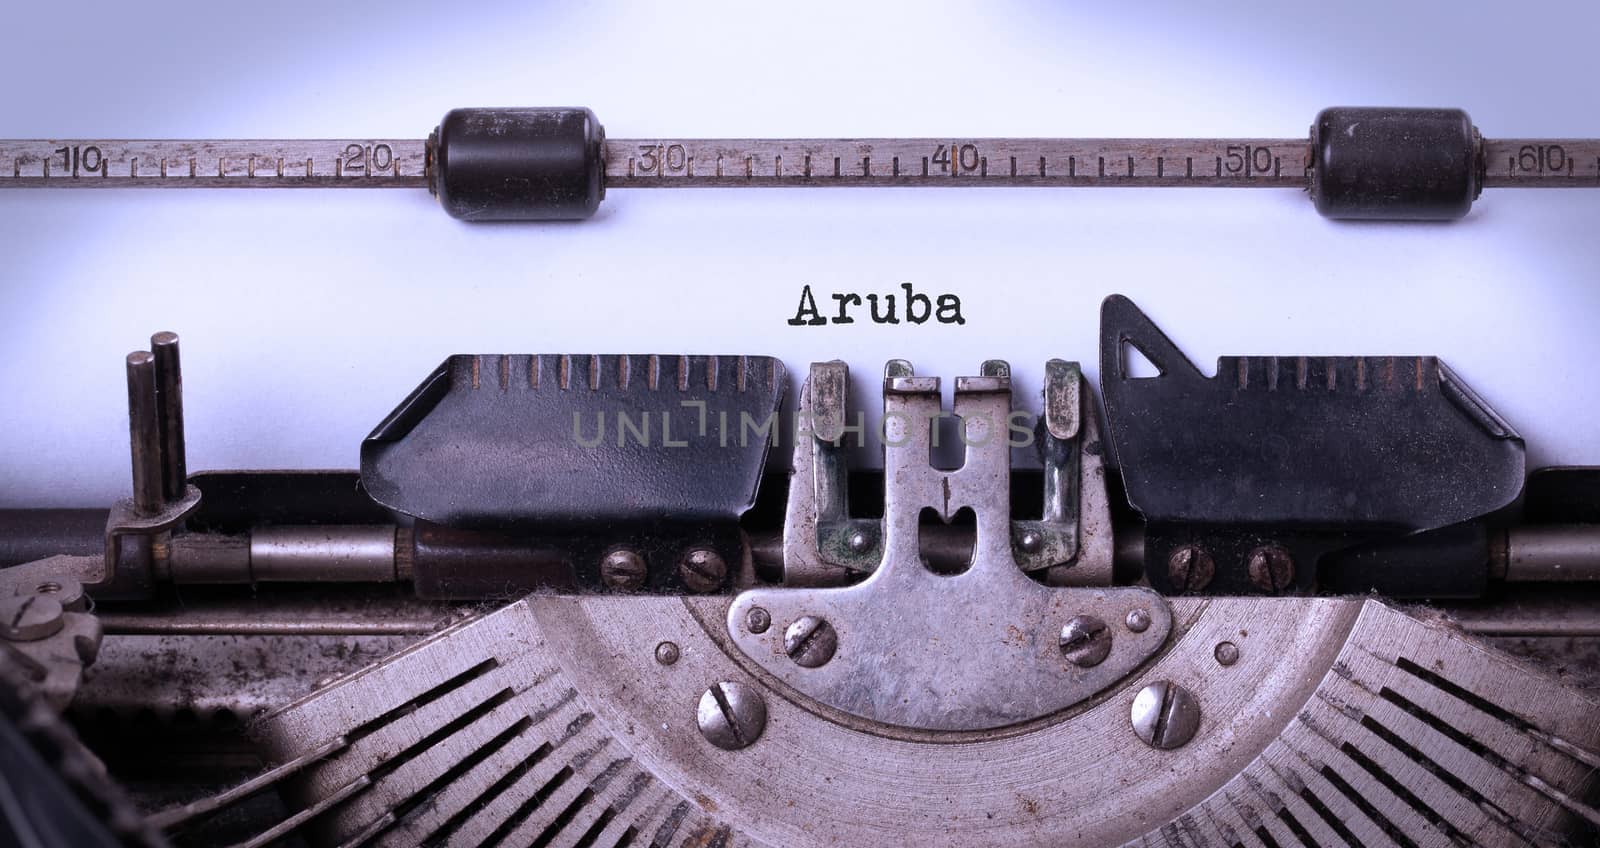 Old typewriter - Aruba by michaklootwijk